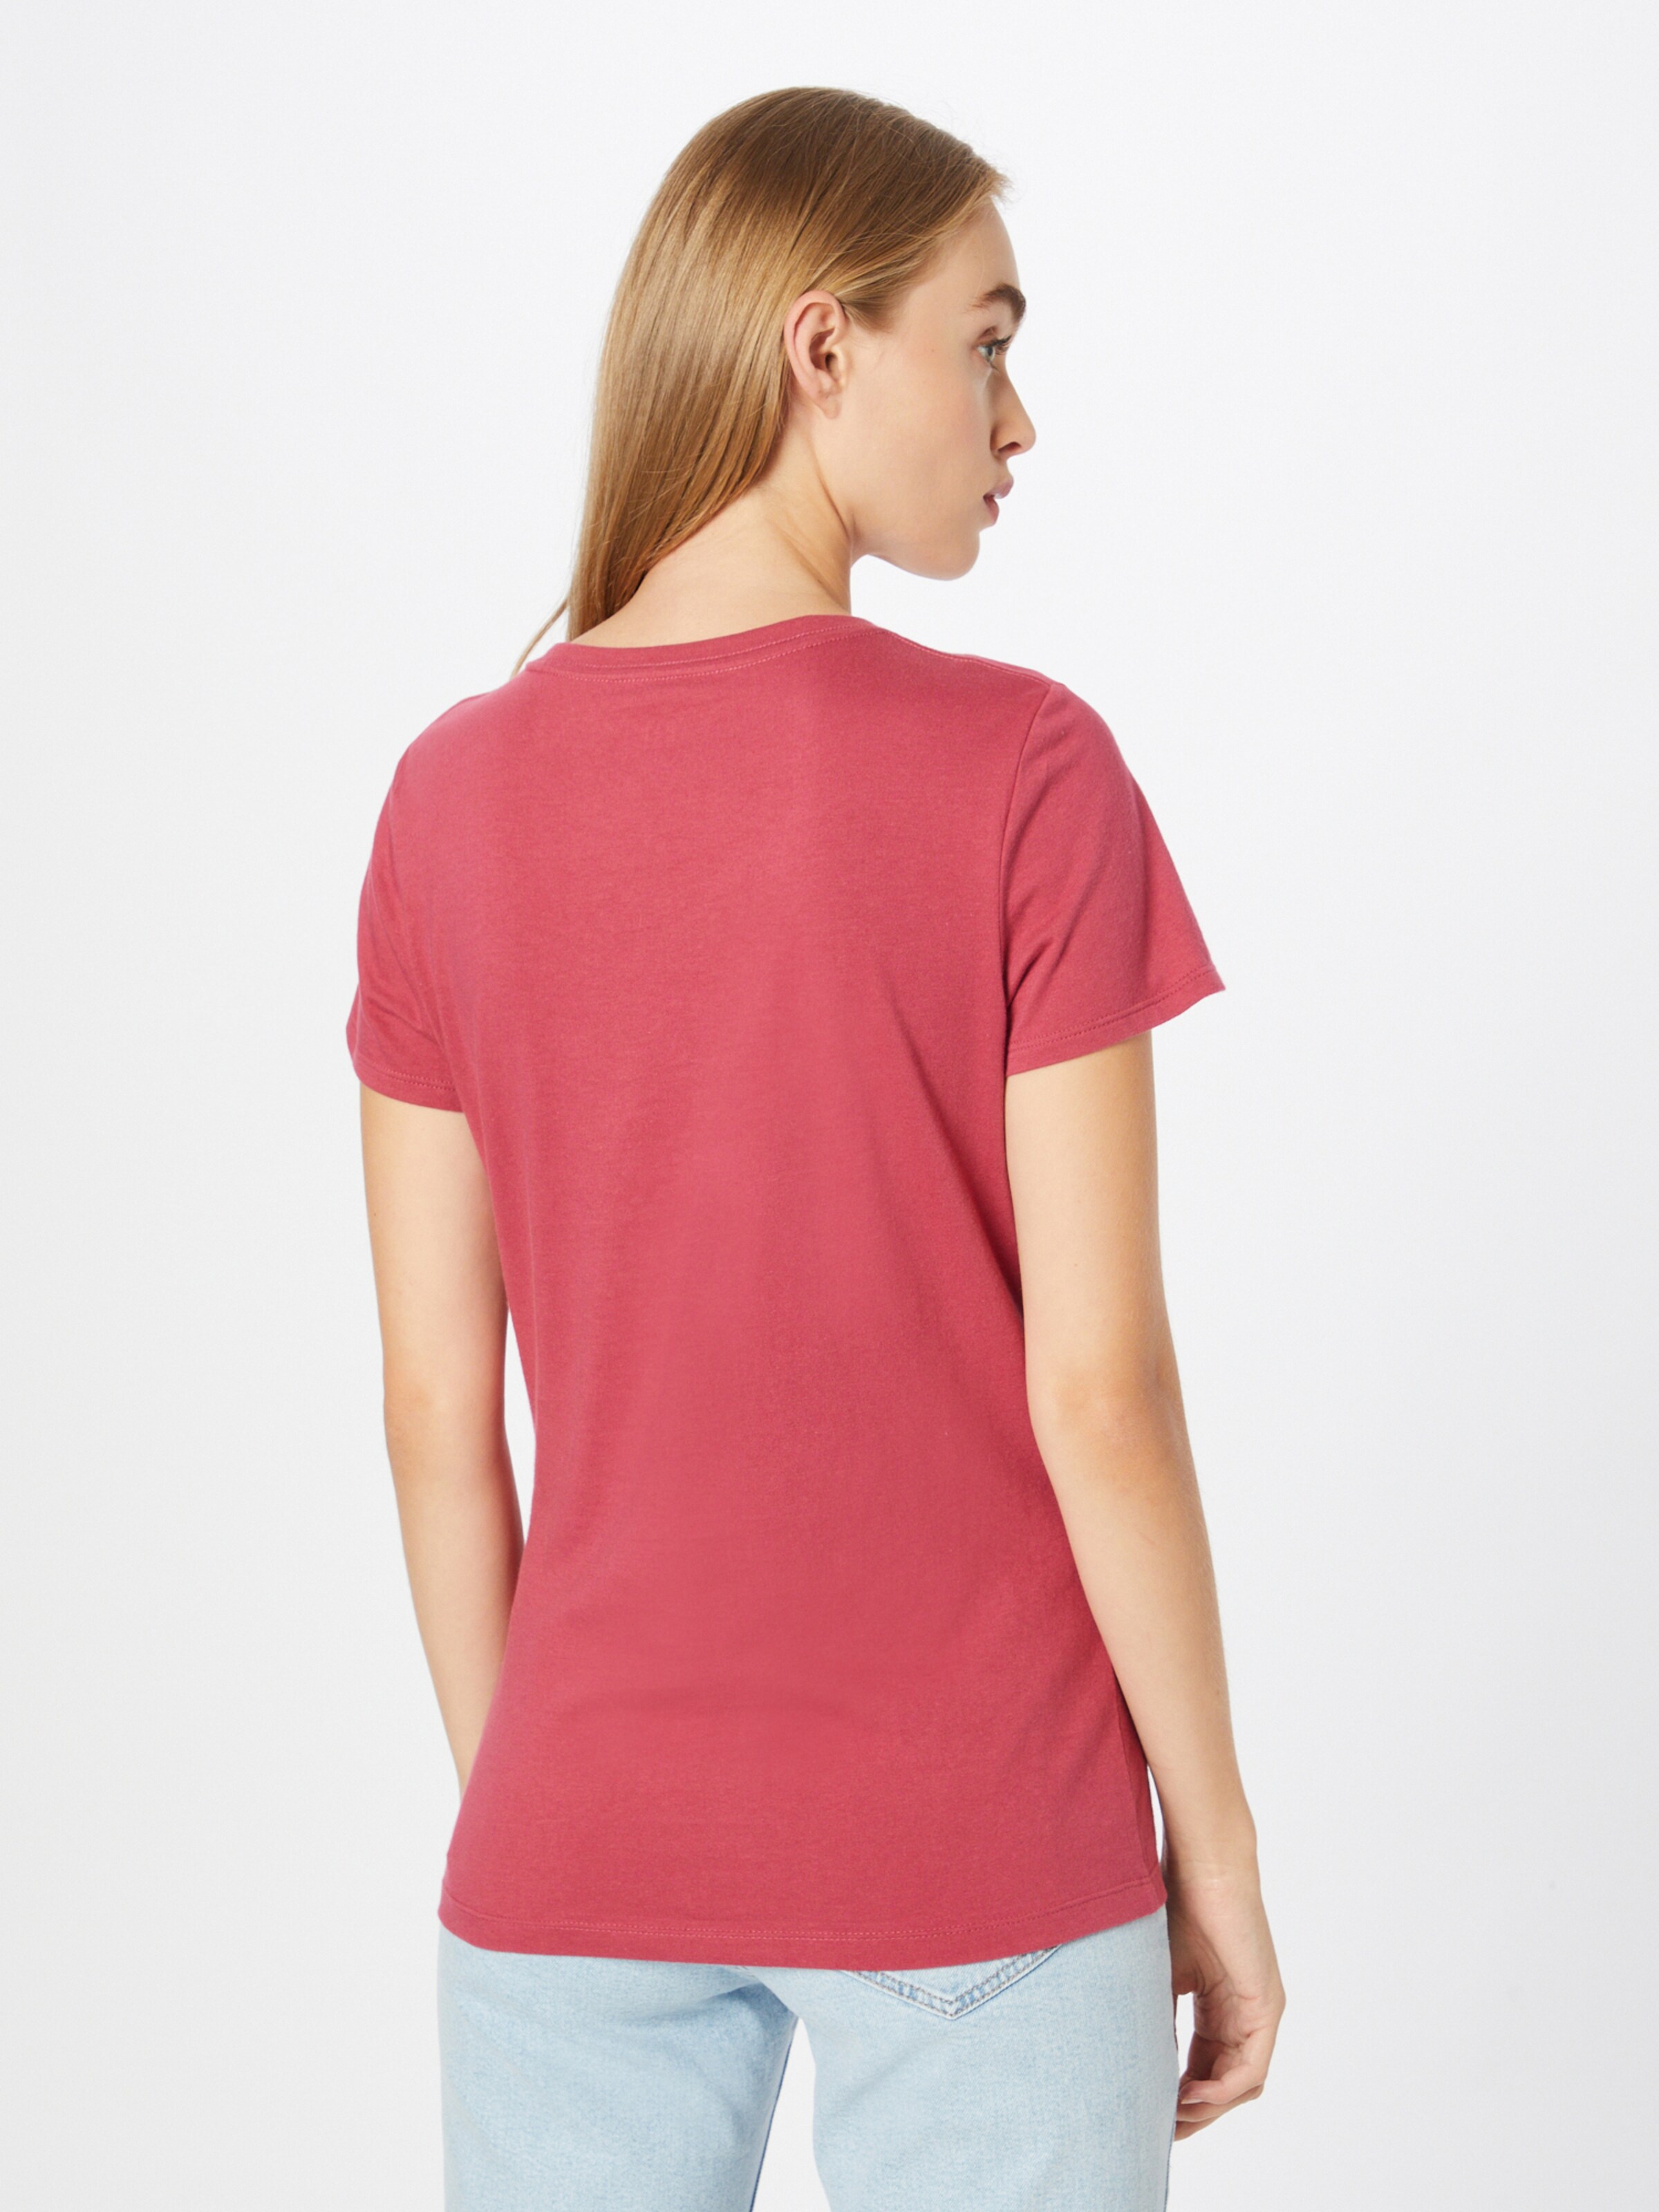 Frauen Shirts & Tops GAP T-Shirt in Pink, Magenta - MS31581